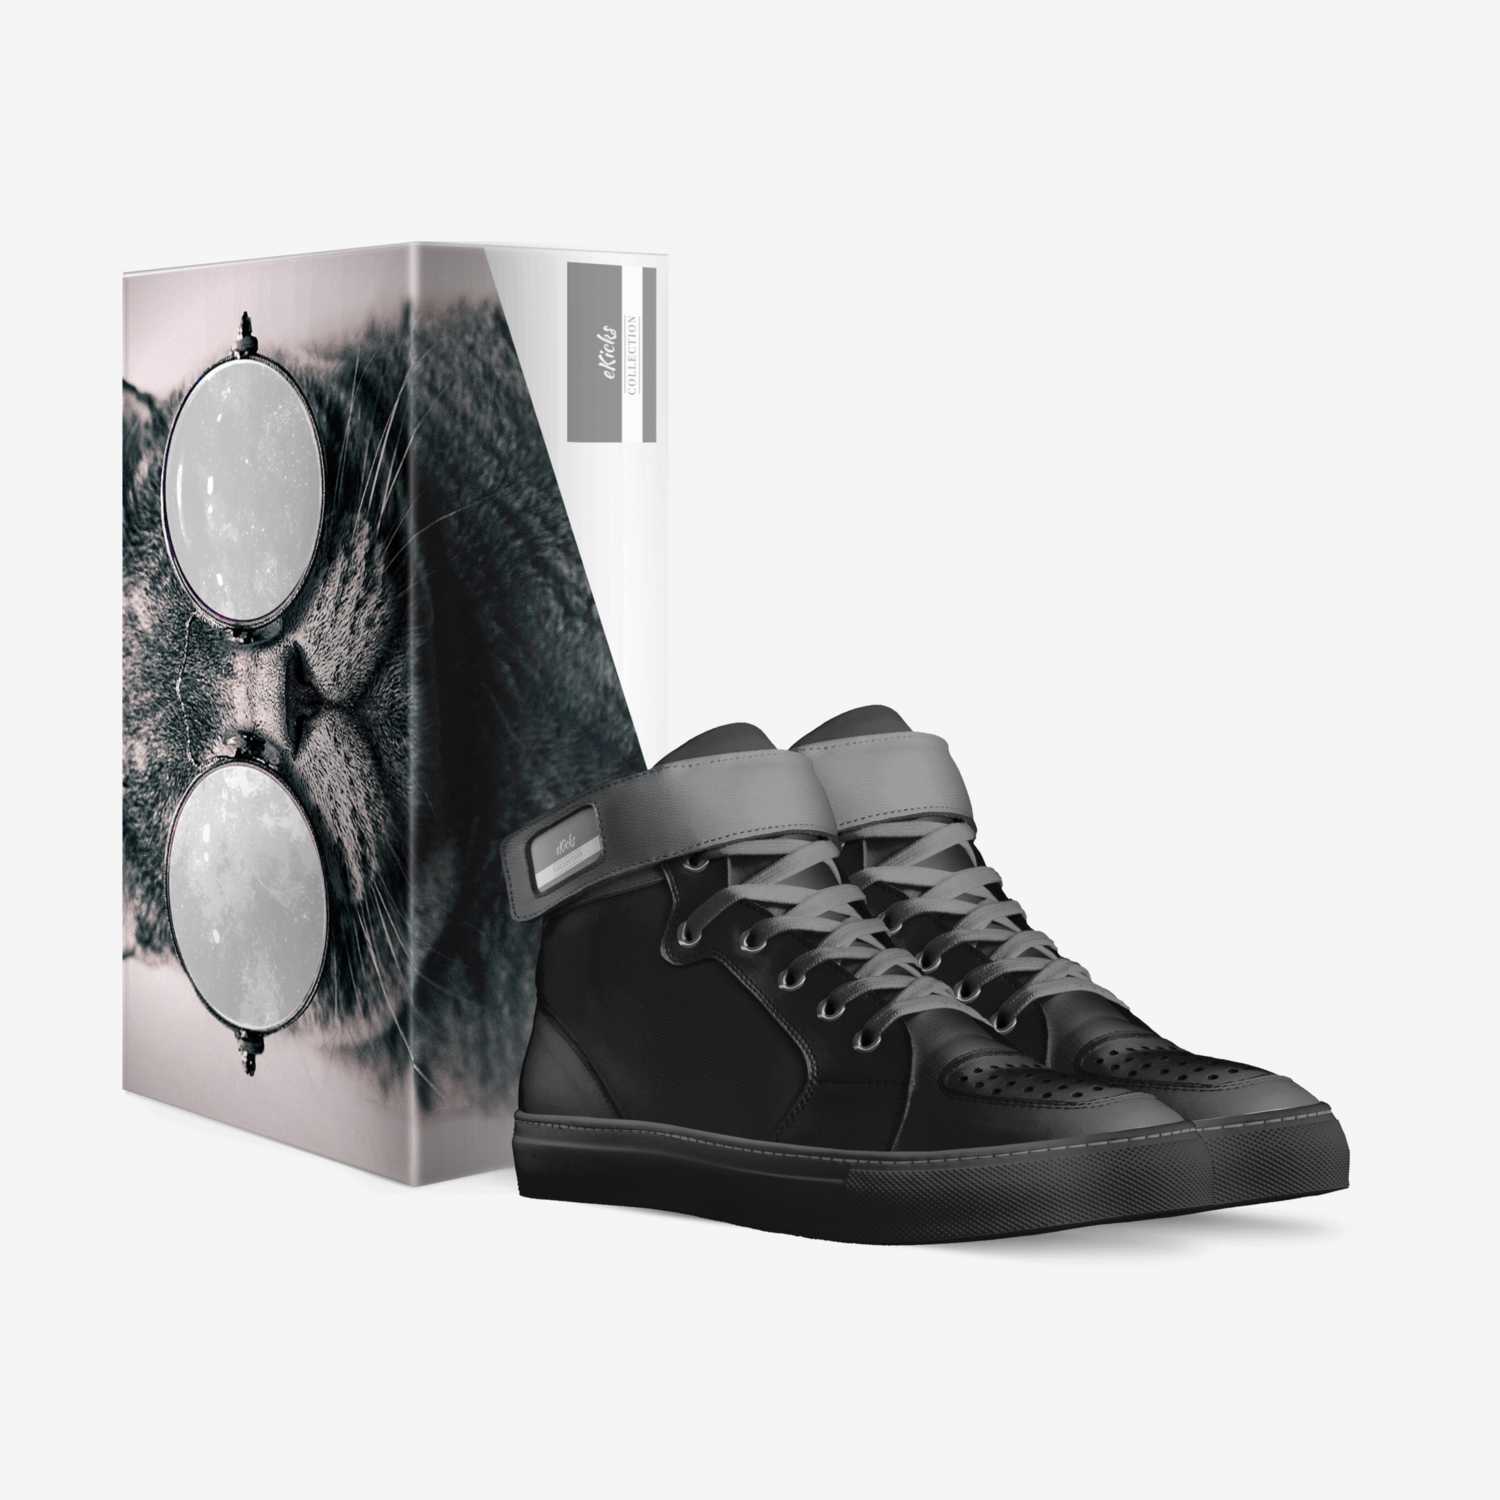 eKicks custom made in Italy shoes by Eboni Woodson | Box view